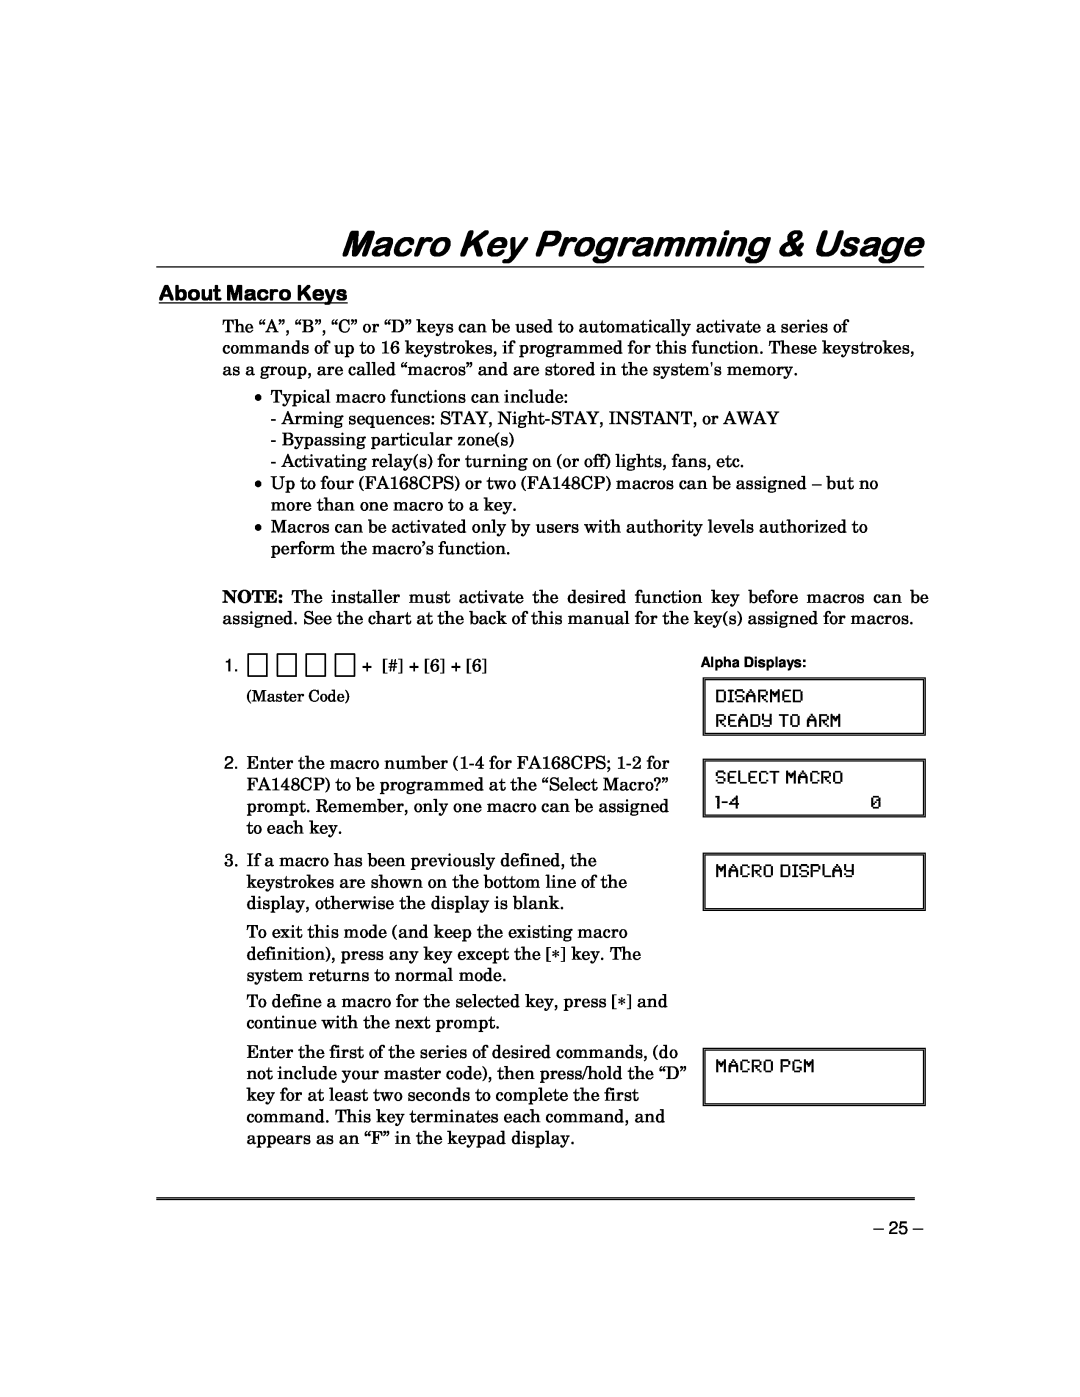 Garmin FA168CPS manual Macro Key Programming & Usage, About Macro Keys, Disarmed Ready To Arm Select Macro 